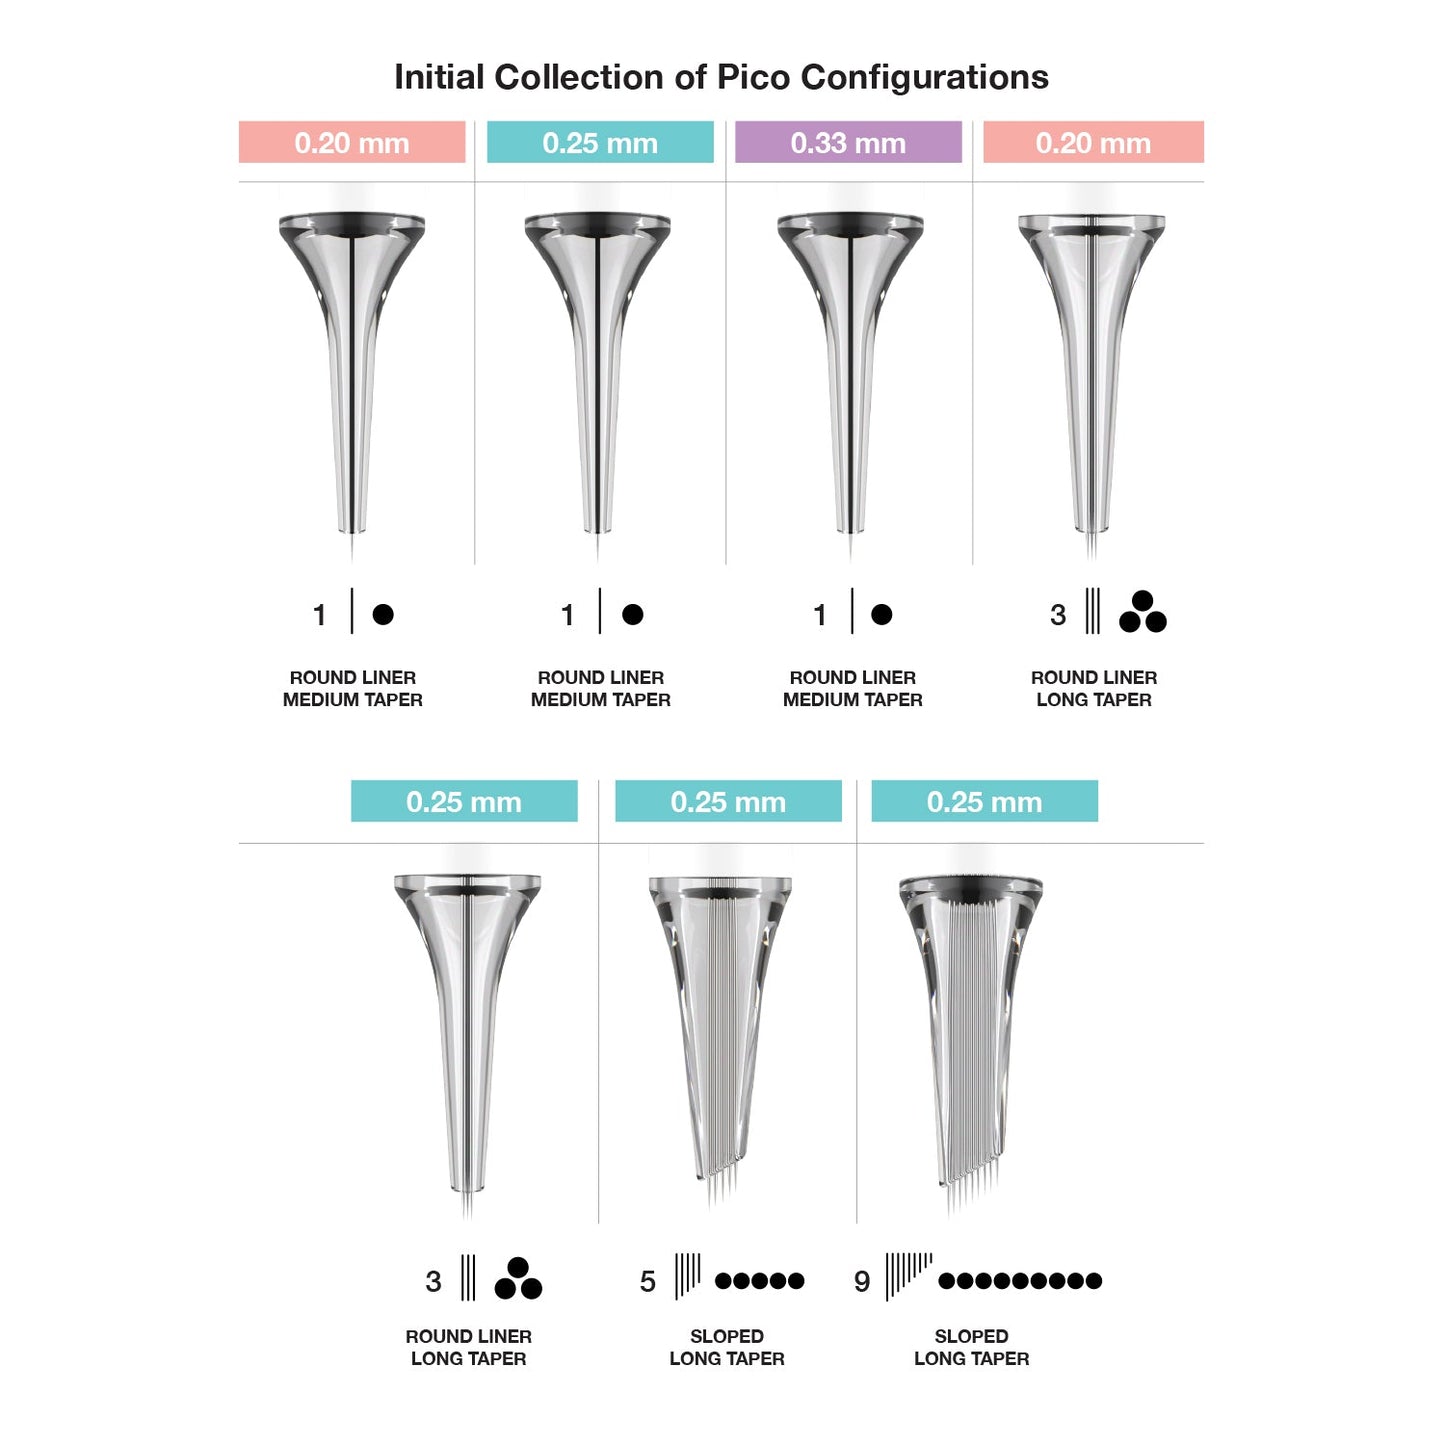 Free Gift - Vertix Pico PMU Membrane Cartridge Needles — Box of 20